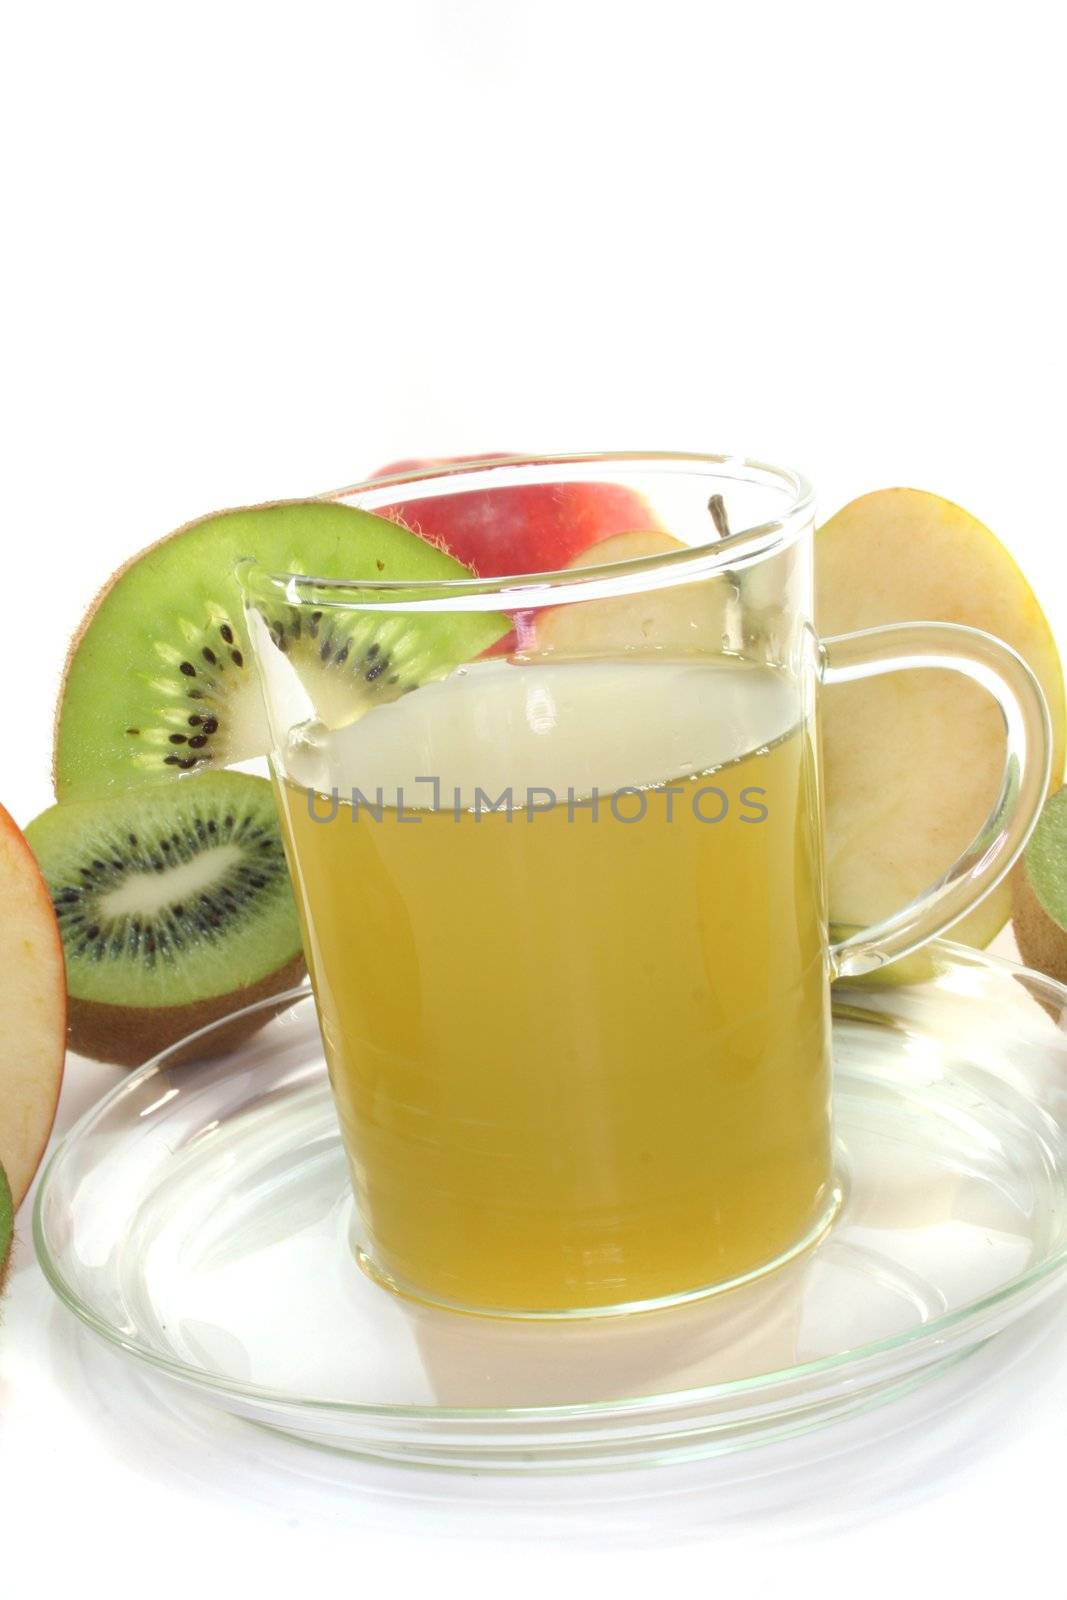 a glass of kiwi-apple tea with fresh kiwis and apples